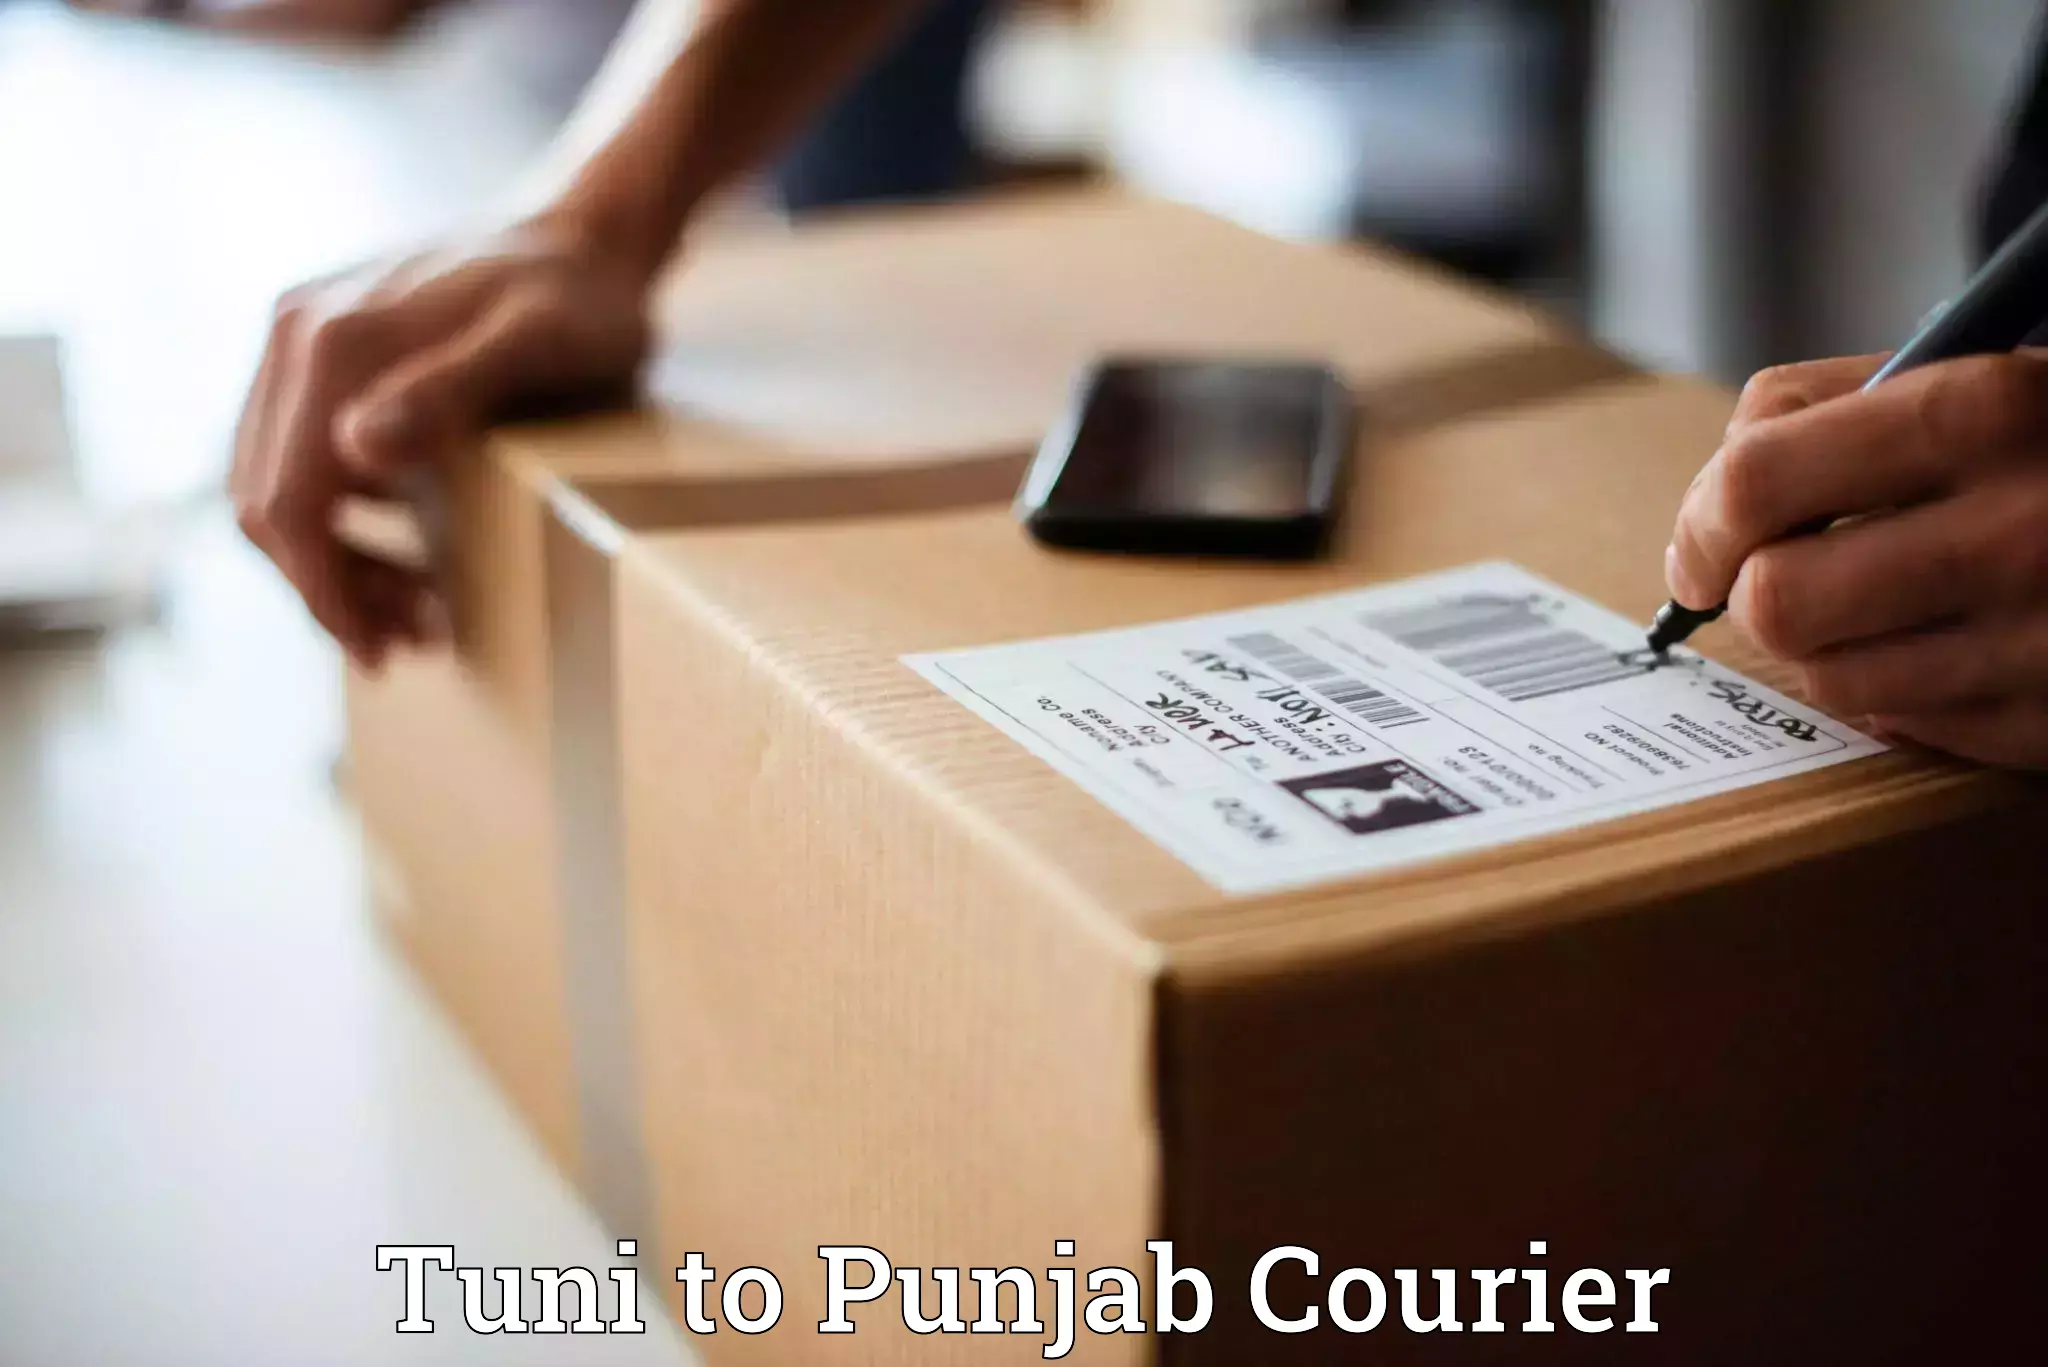 Courier service comparison Tuni to Pathankot